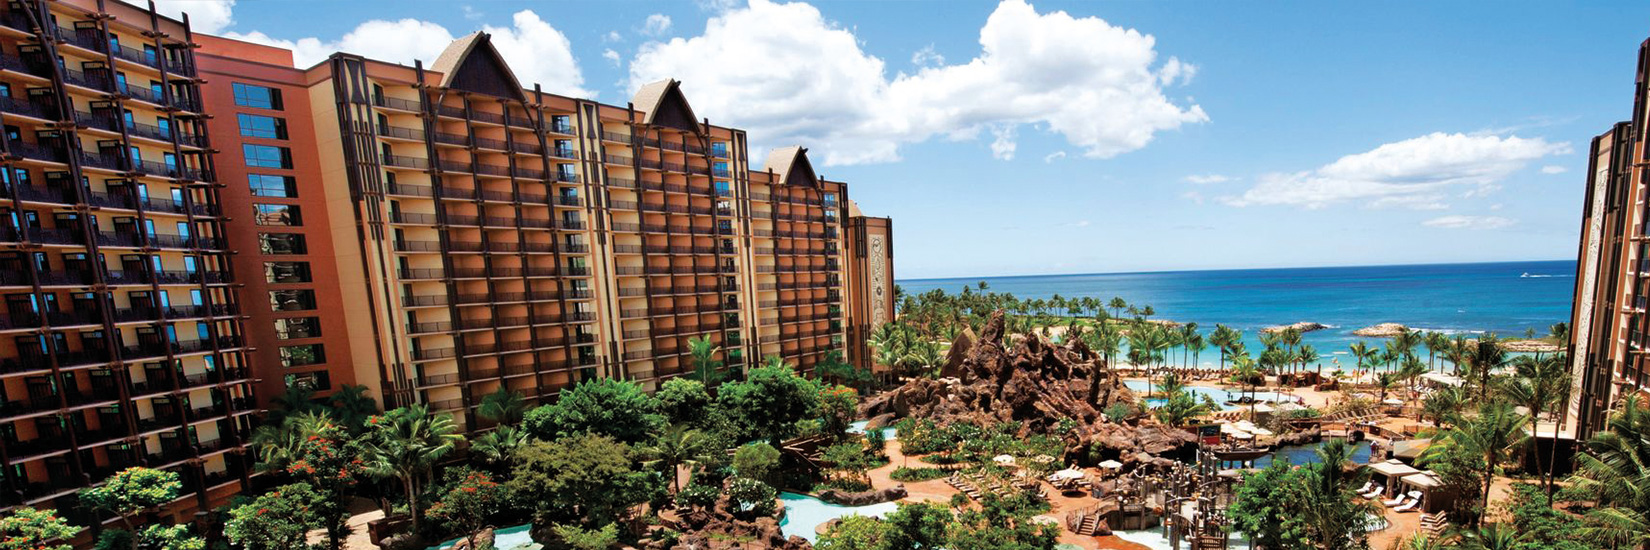 Hotels overlooking a breathtaking seascape.